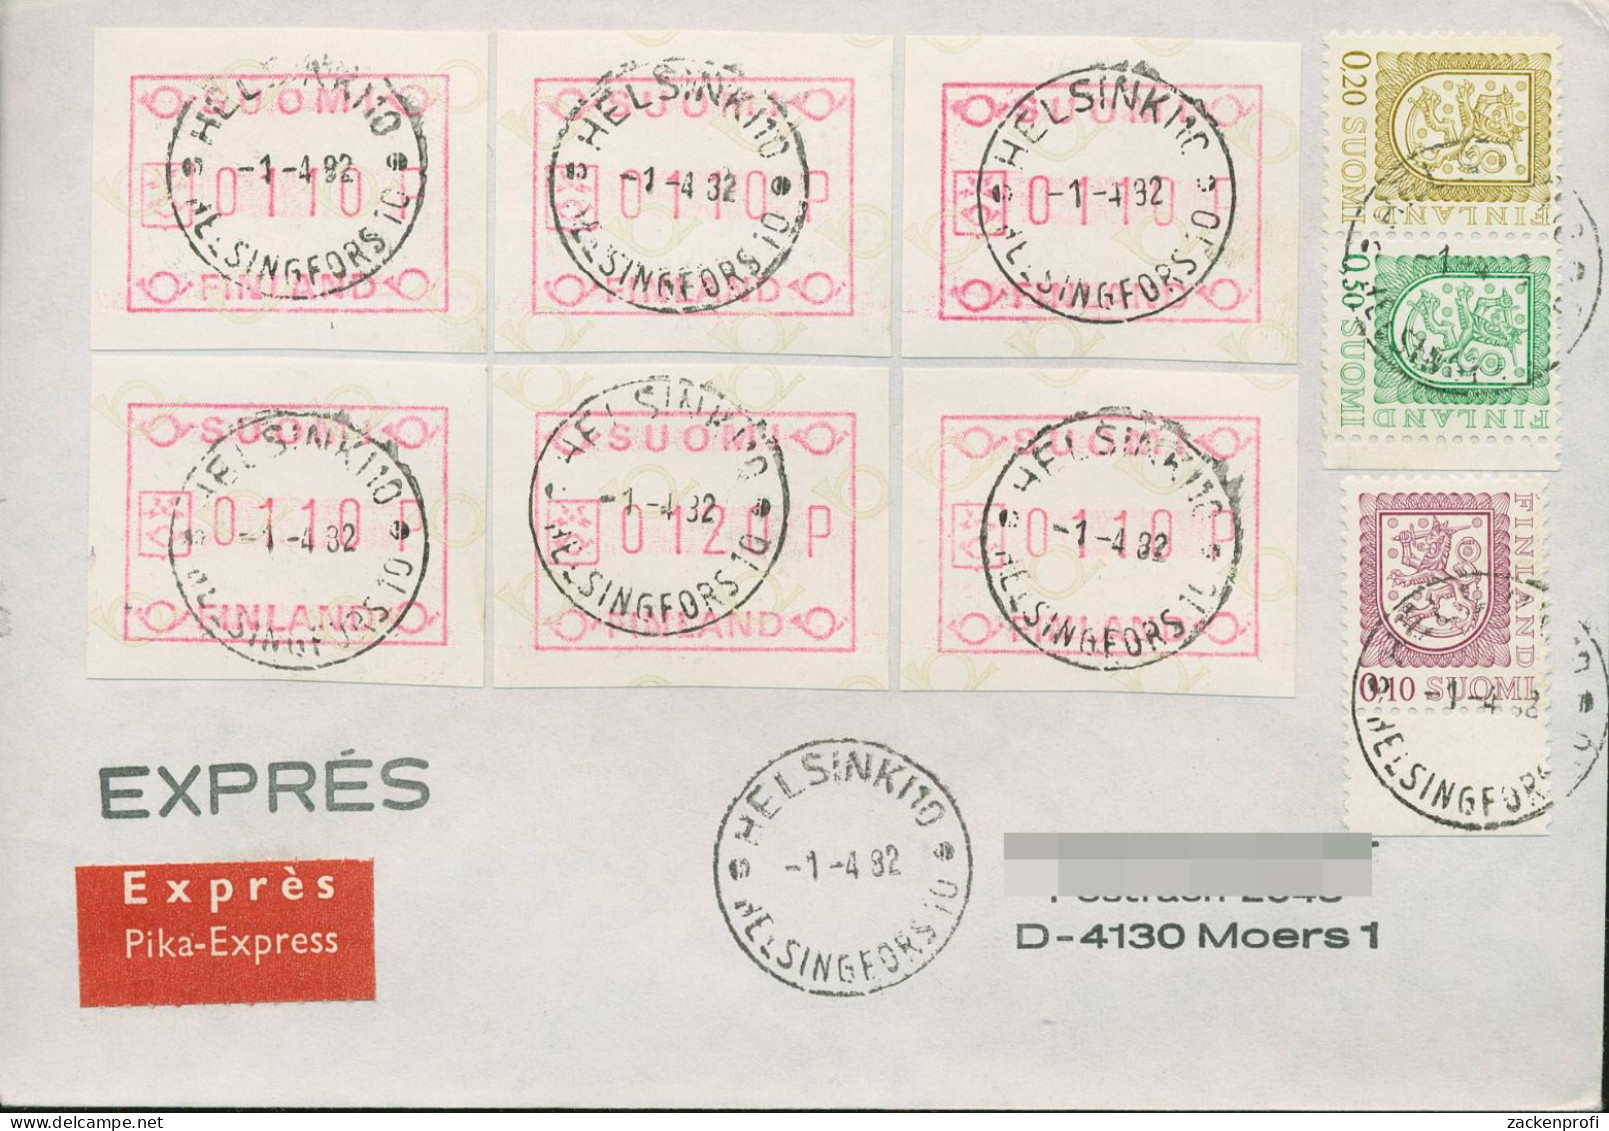 Finnland ATM 1982 Kl. Posthörner, FDC ATM 1.1 Auf Express-Brief (X80556) - Viñetas De Franqueo [ATM]